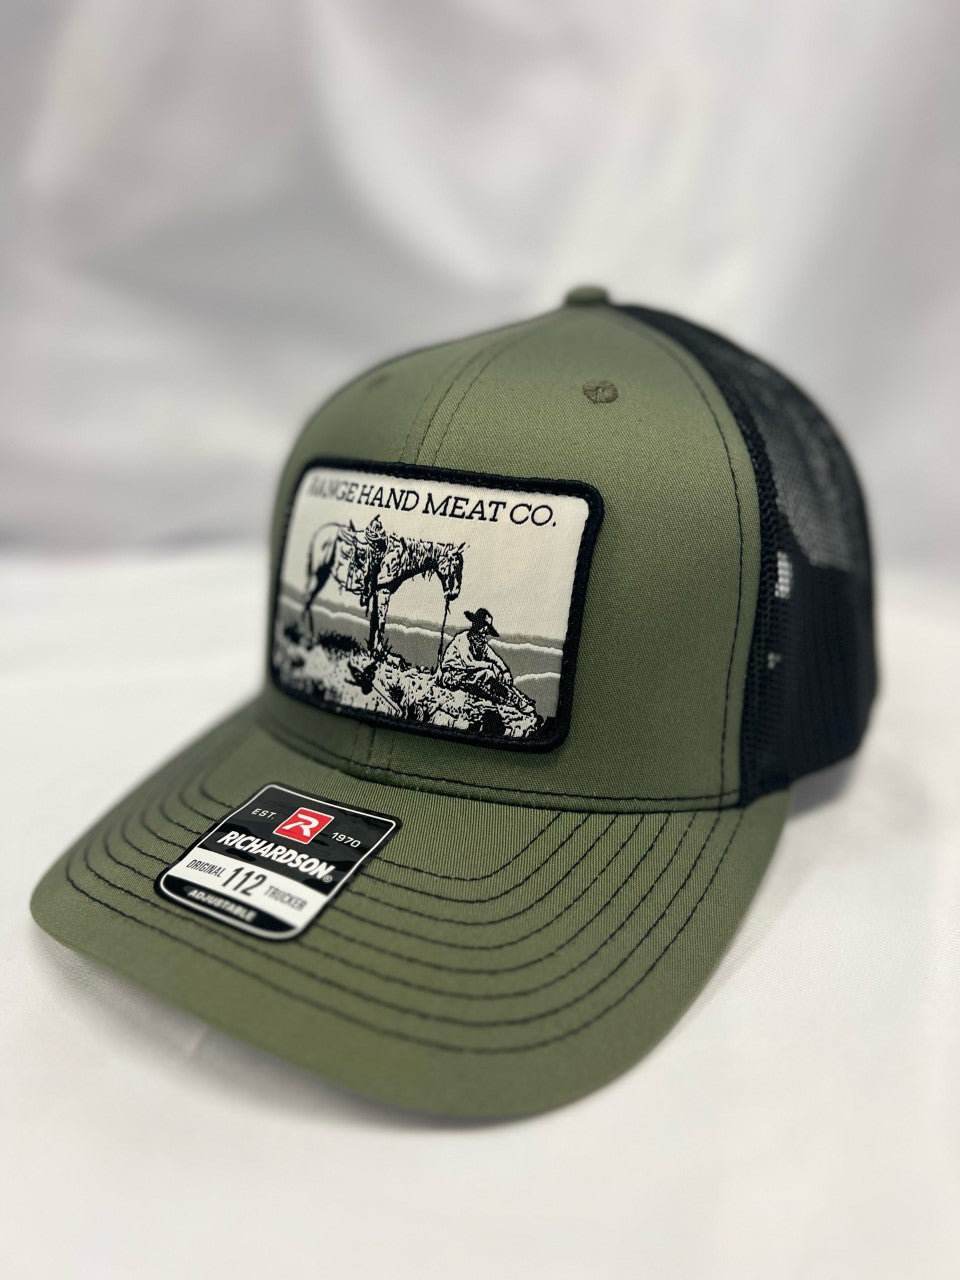 Range Hand Army Green Original 112 Horse Patch Trucker Hat